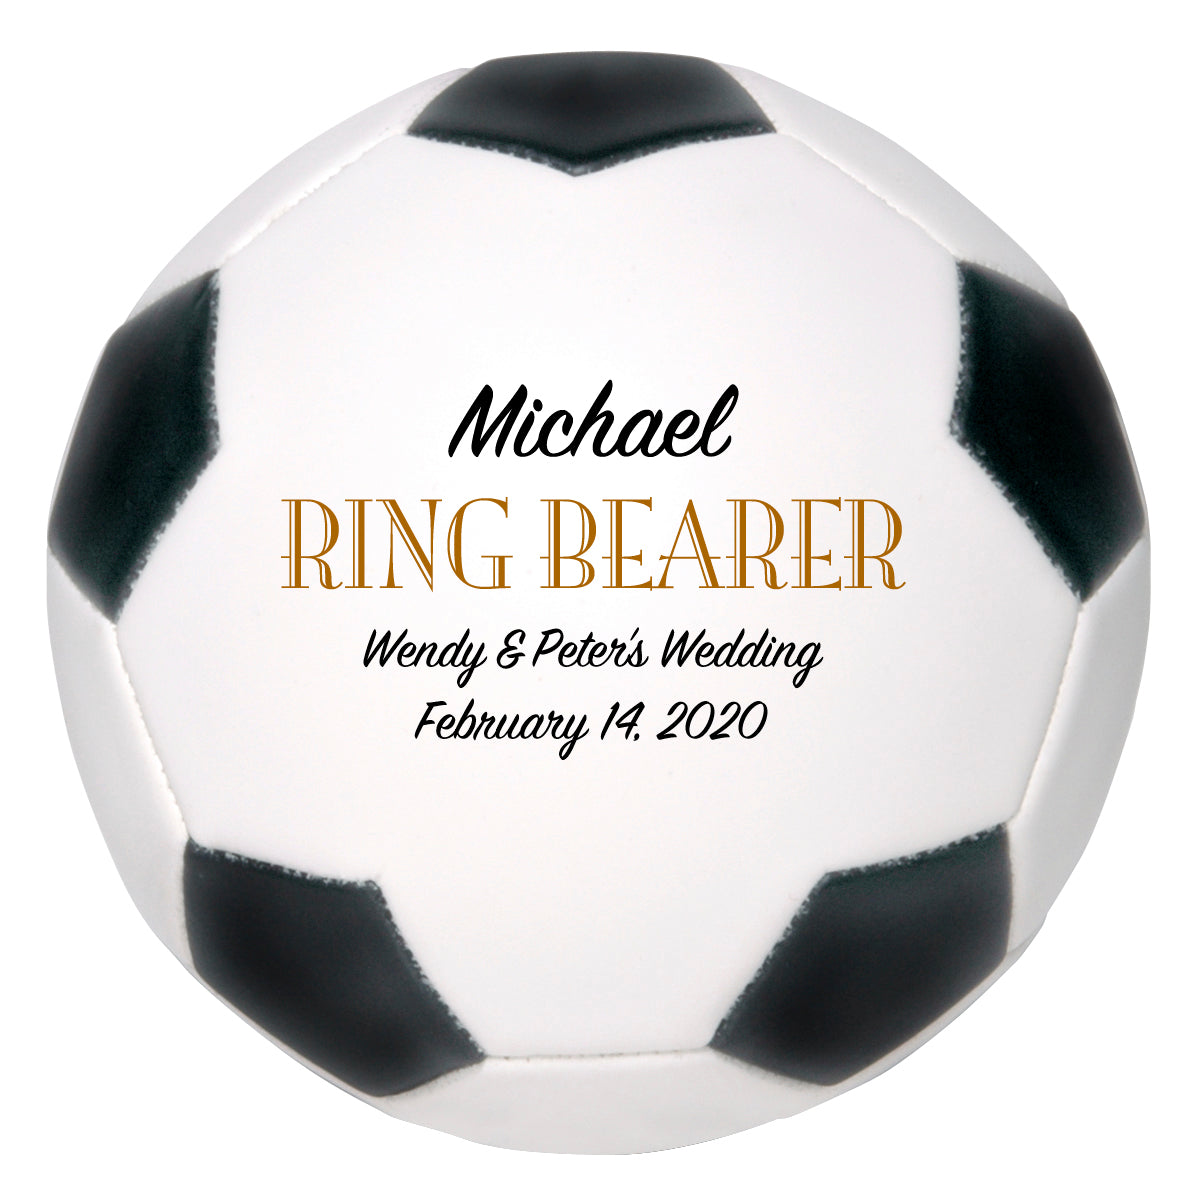 Personalized Wedding Soccer Ball Keepsake - Best Man - Ring Bearer - Groomsman Gifts